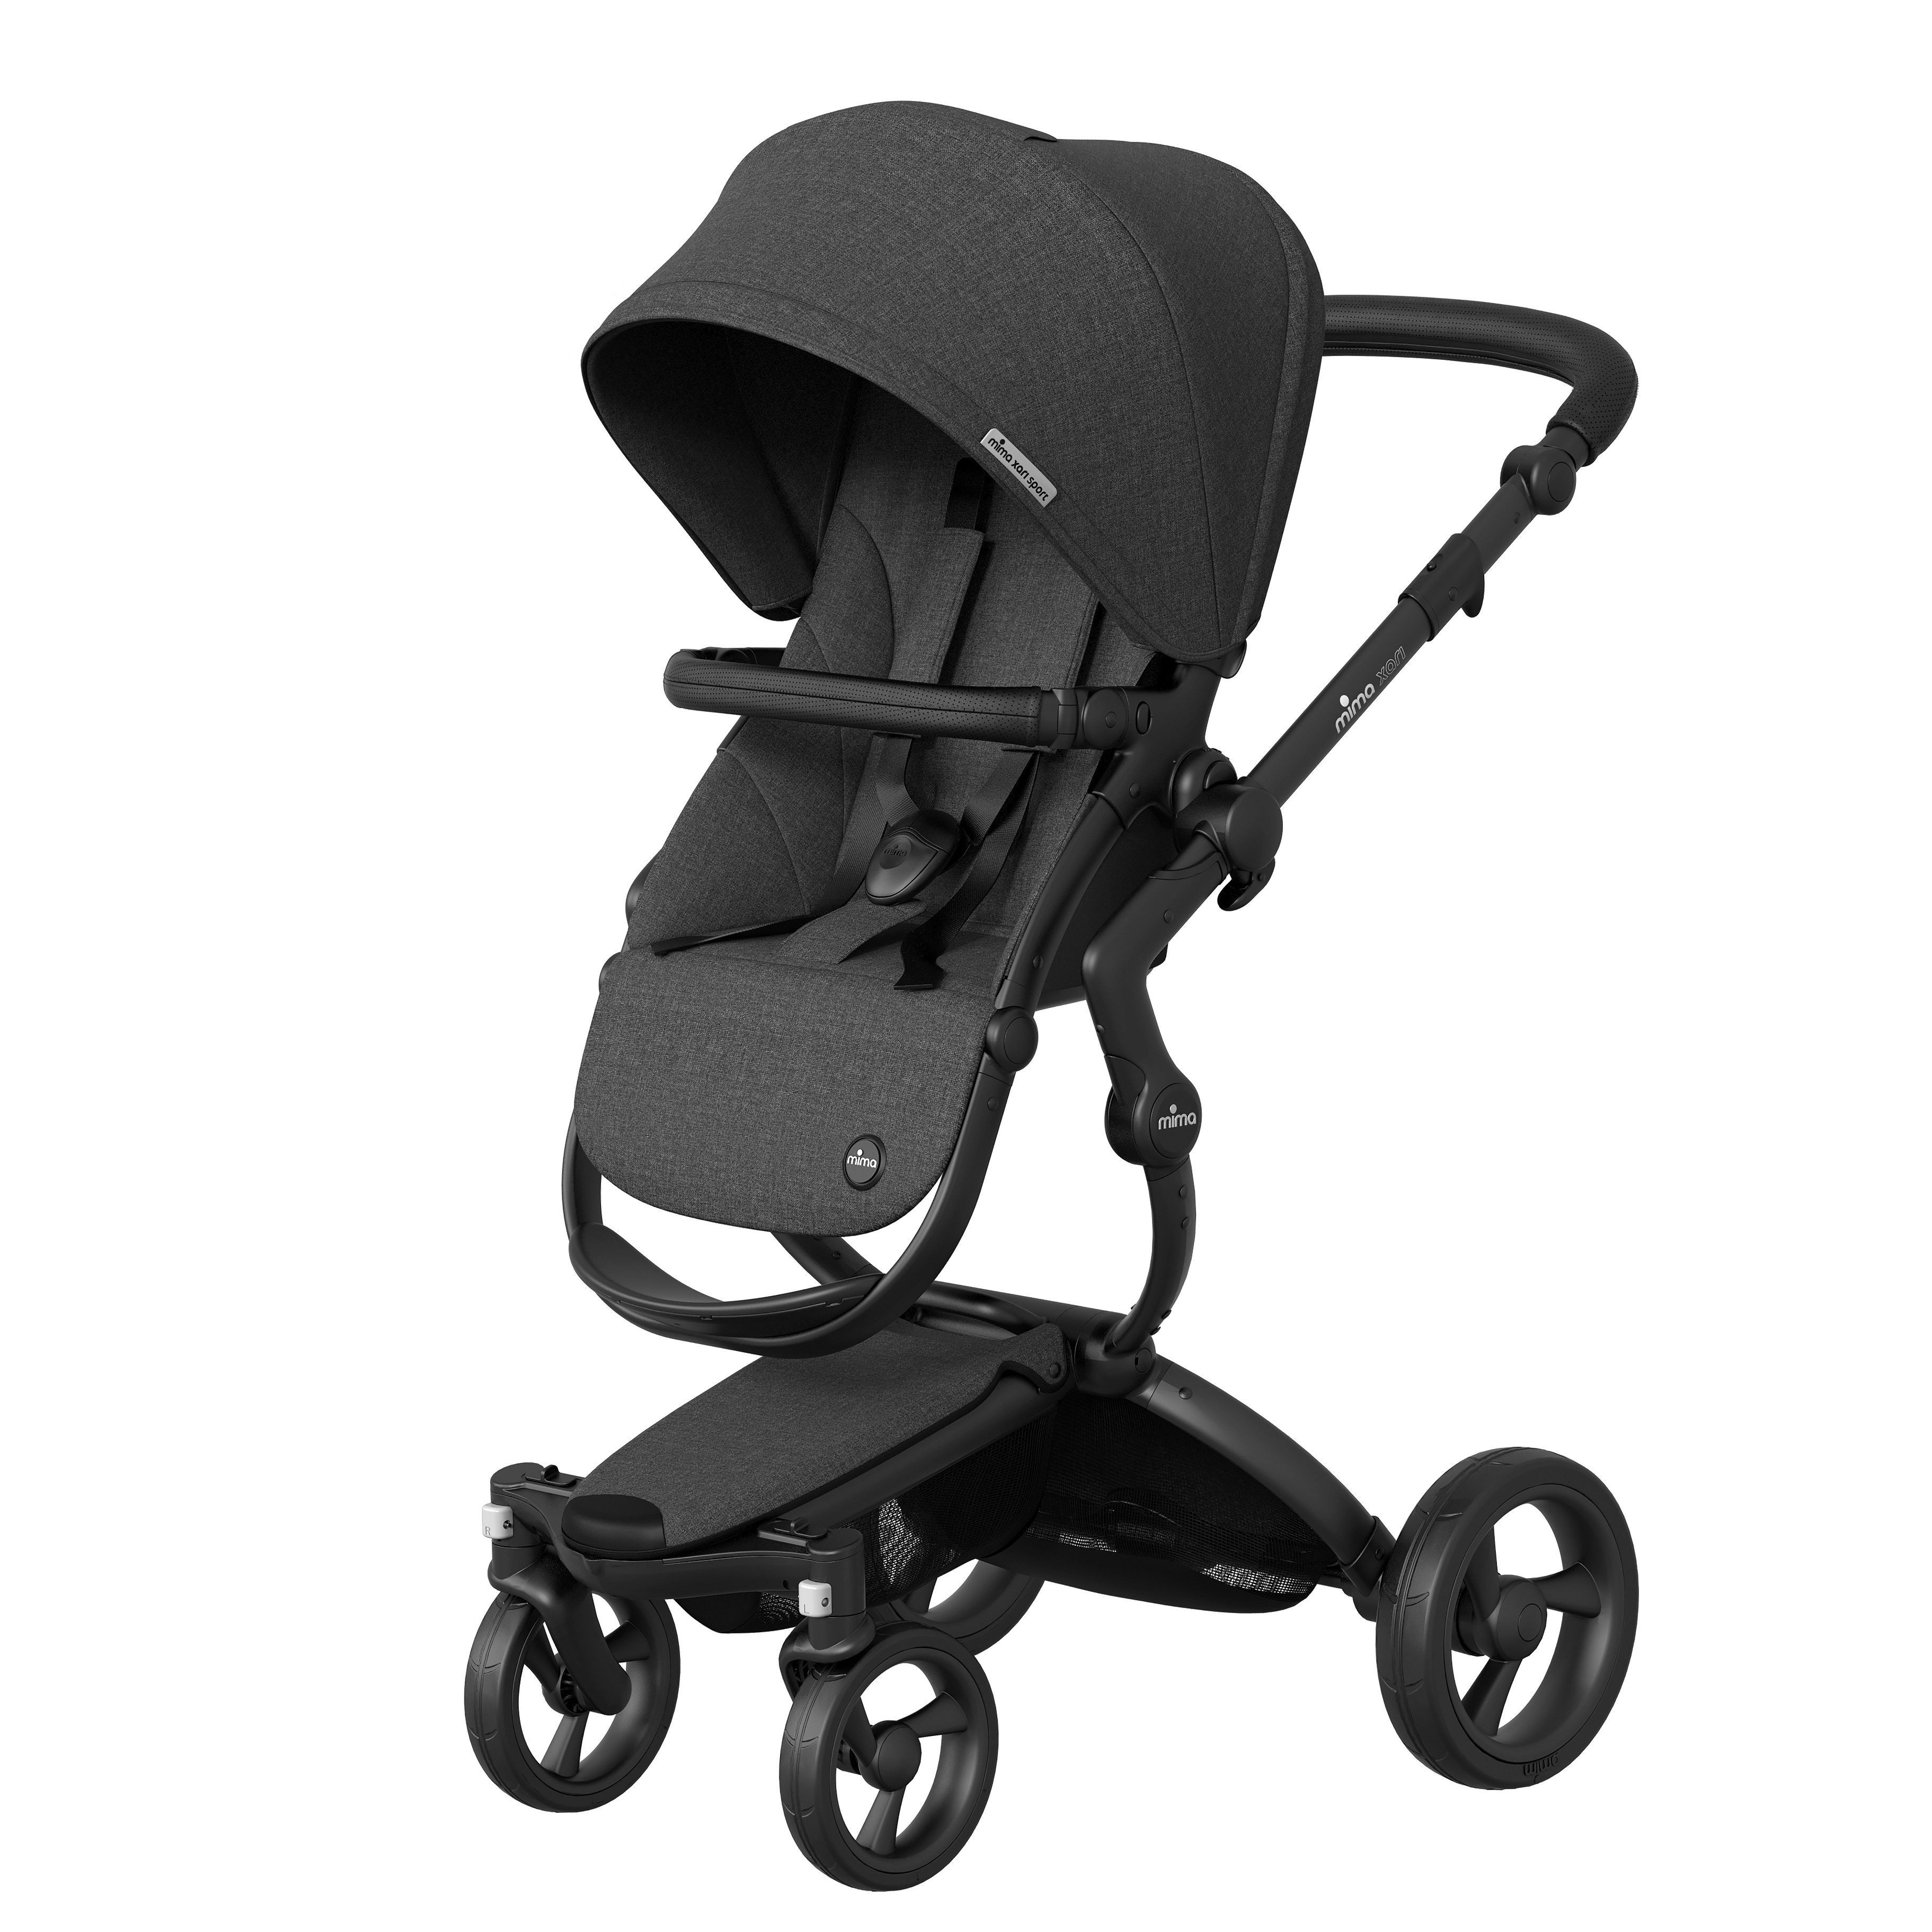 Mima Xari Sport Black Charcoal kolica za bebe A401201